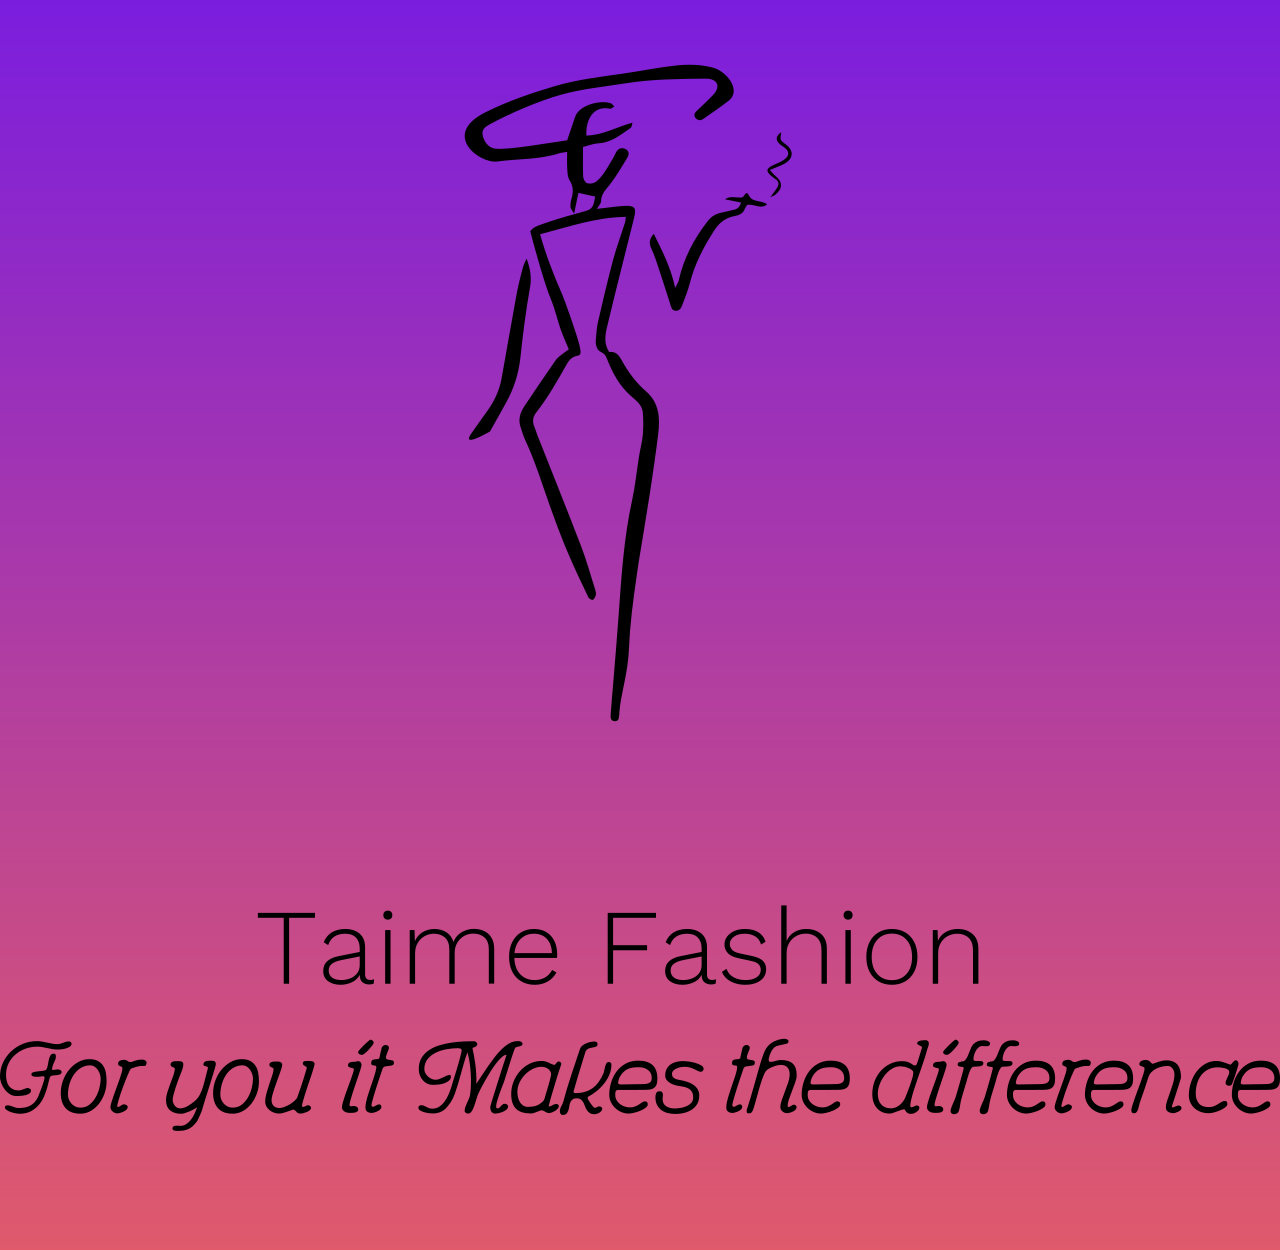 Taime Fashion 's web page